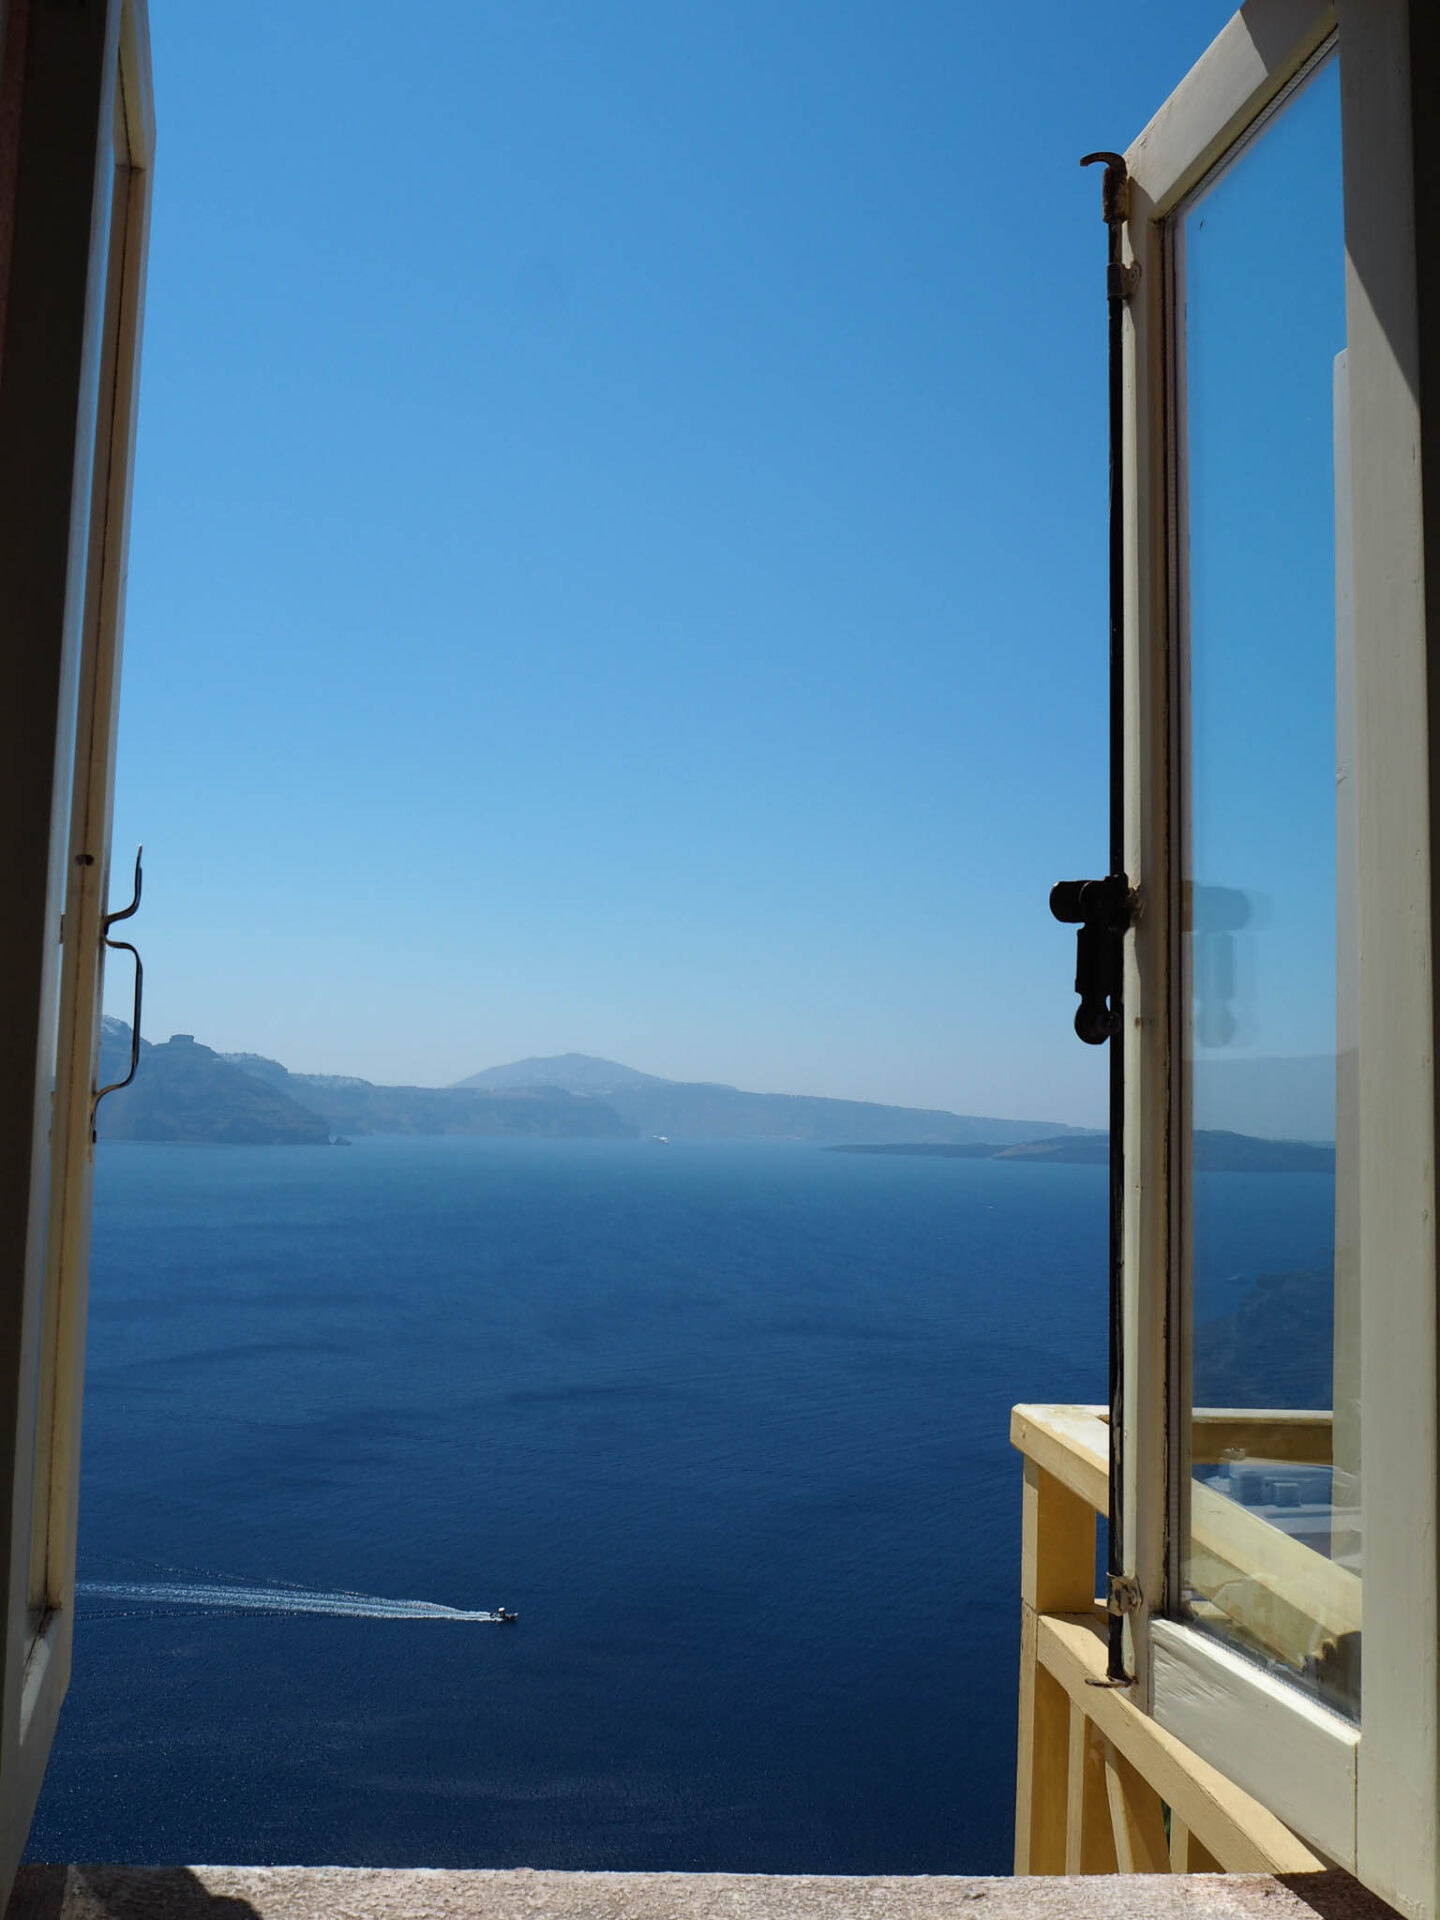 Santorini Oia window with caldera view